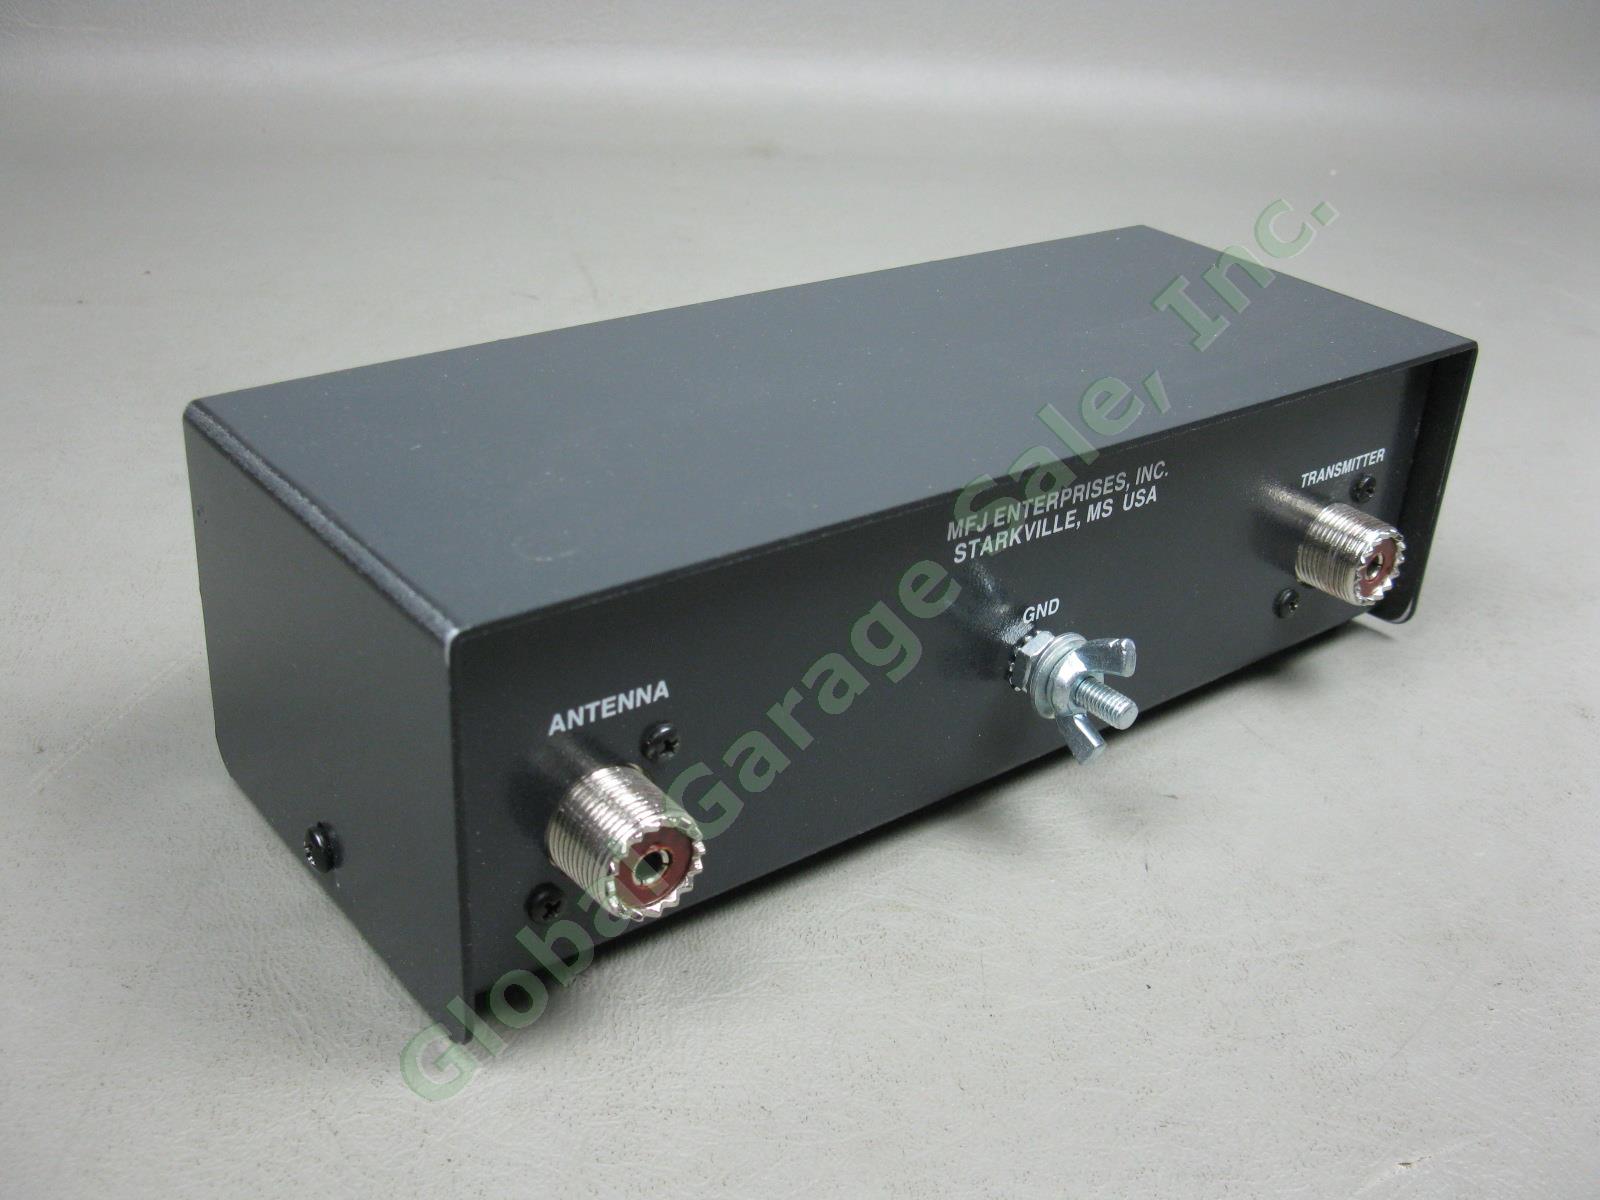 Black MFJ-921 VHF Dual Band Ham Radio Antenna Tuner 144-220MHz Tested Works + NR 4